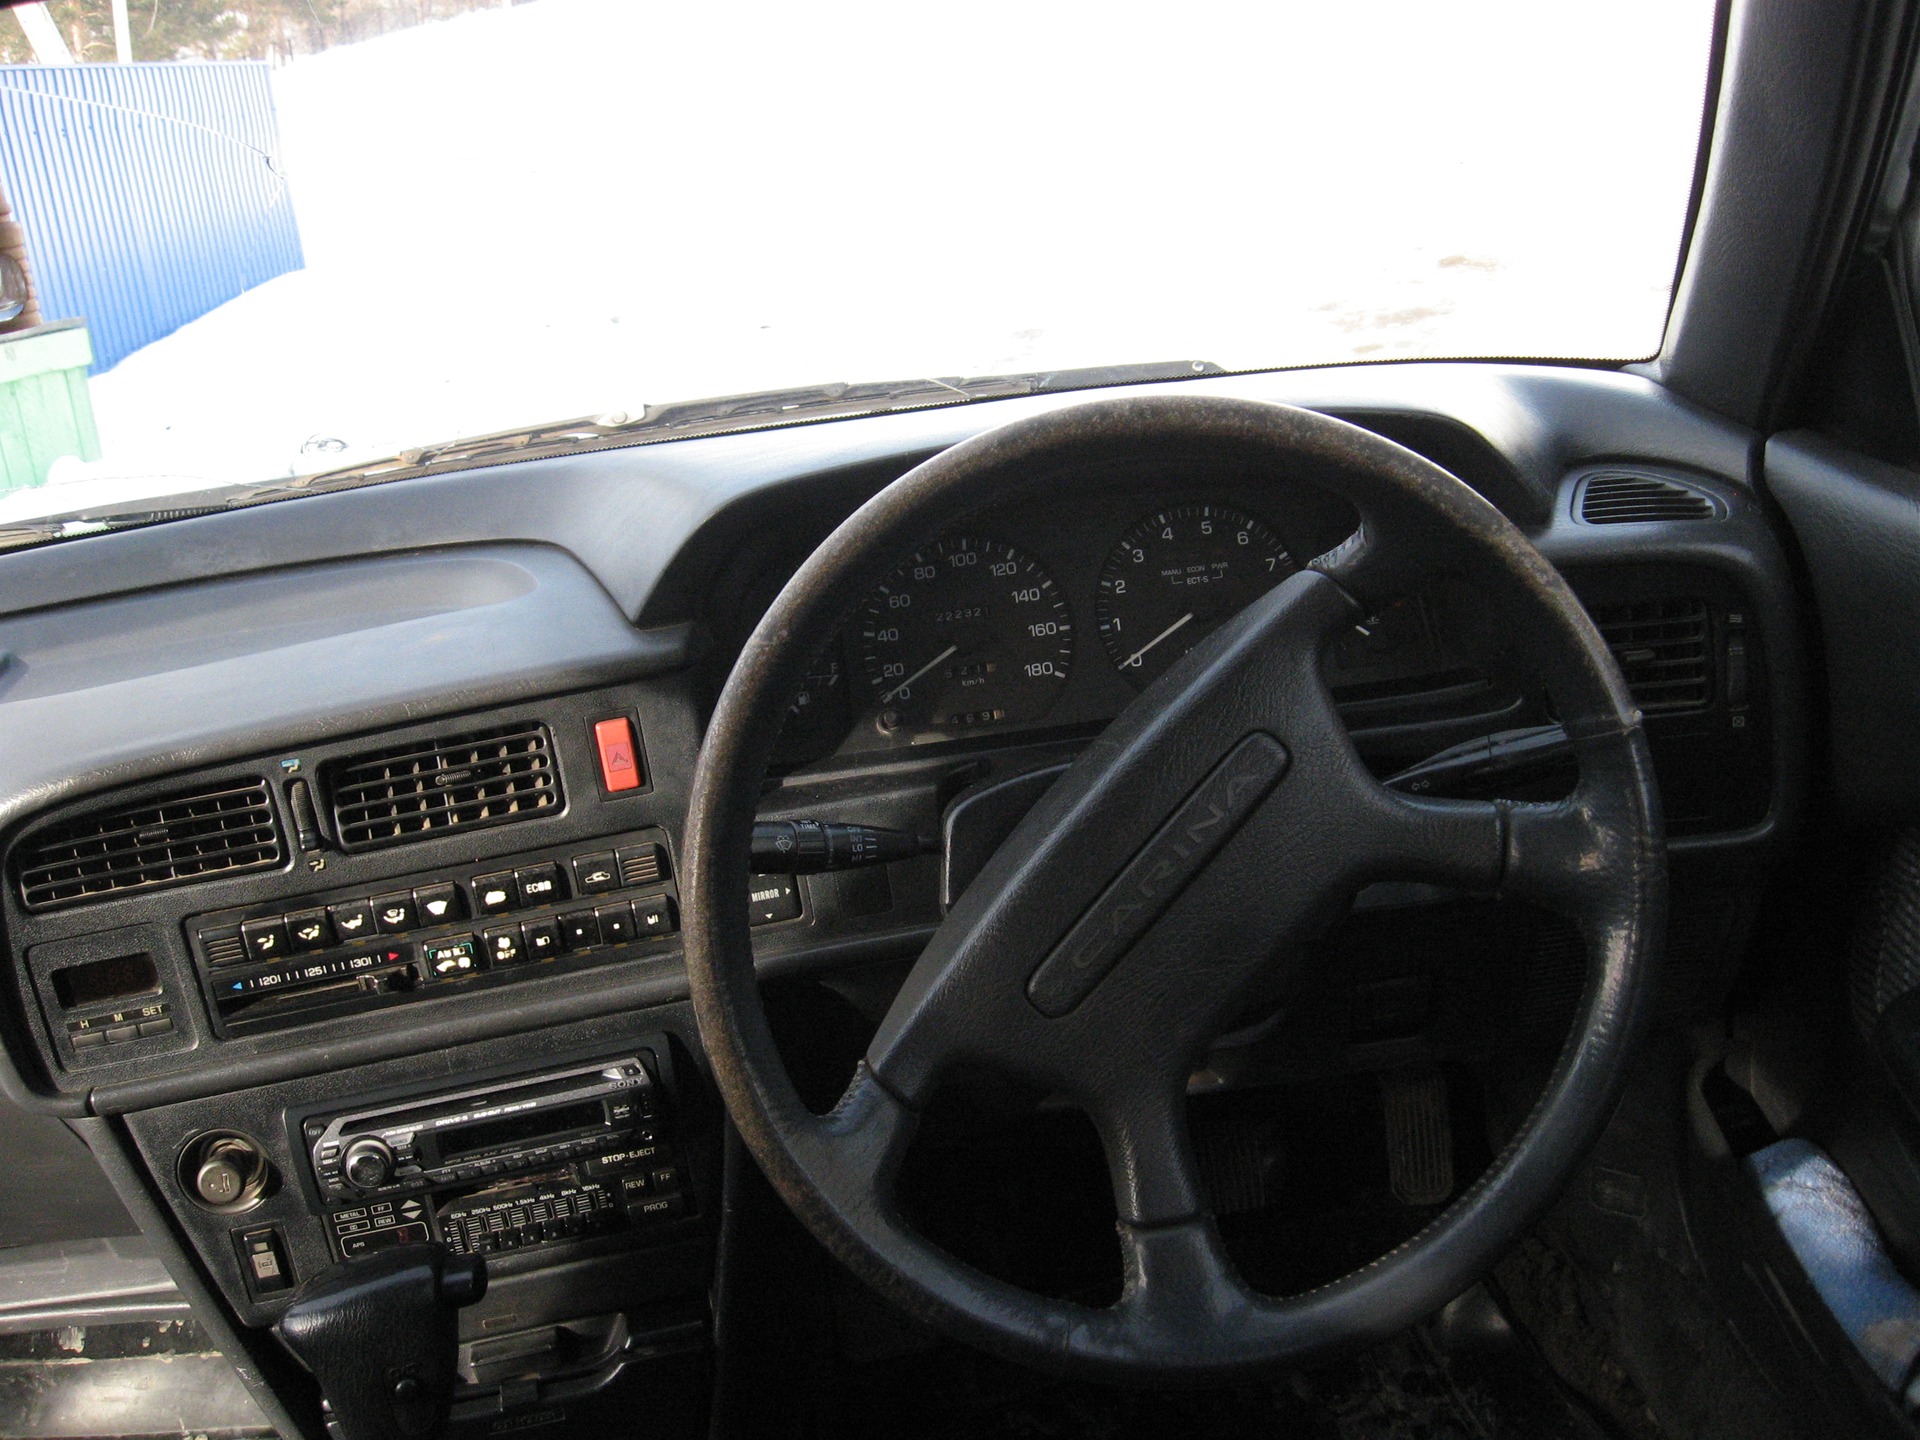       Toyota Carina 16 1989 